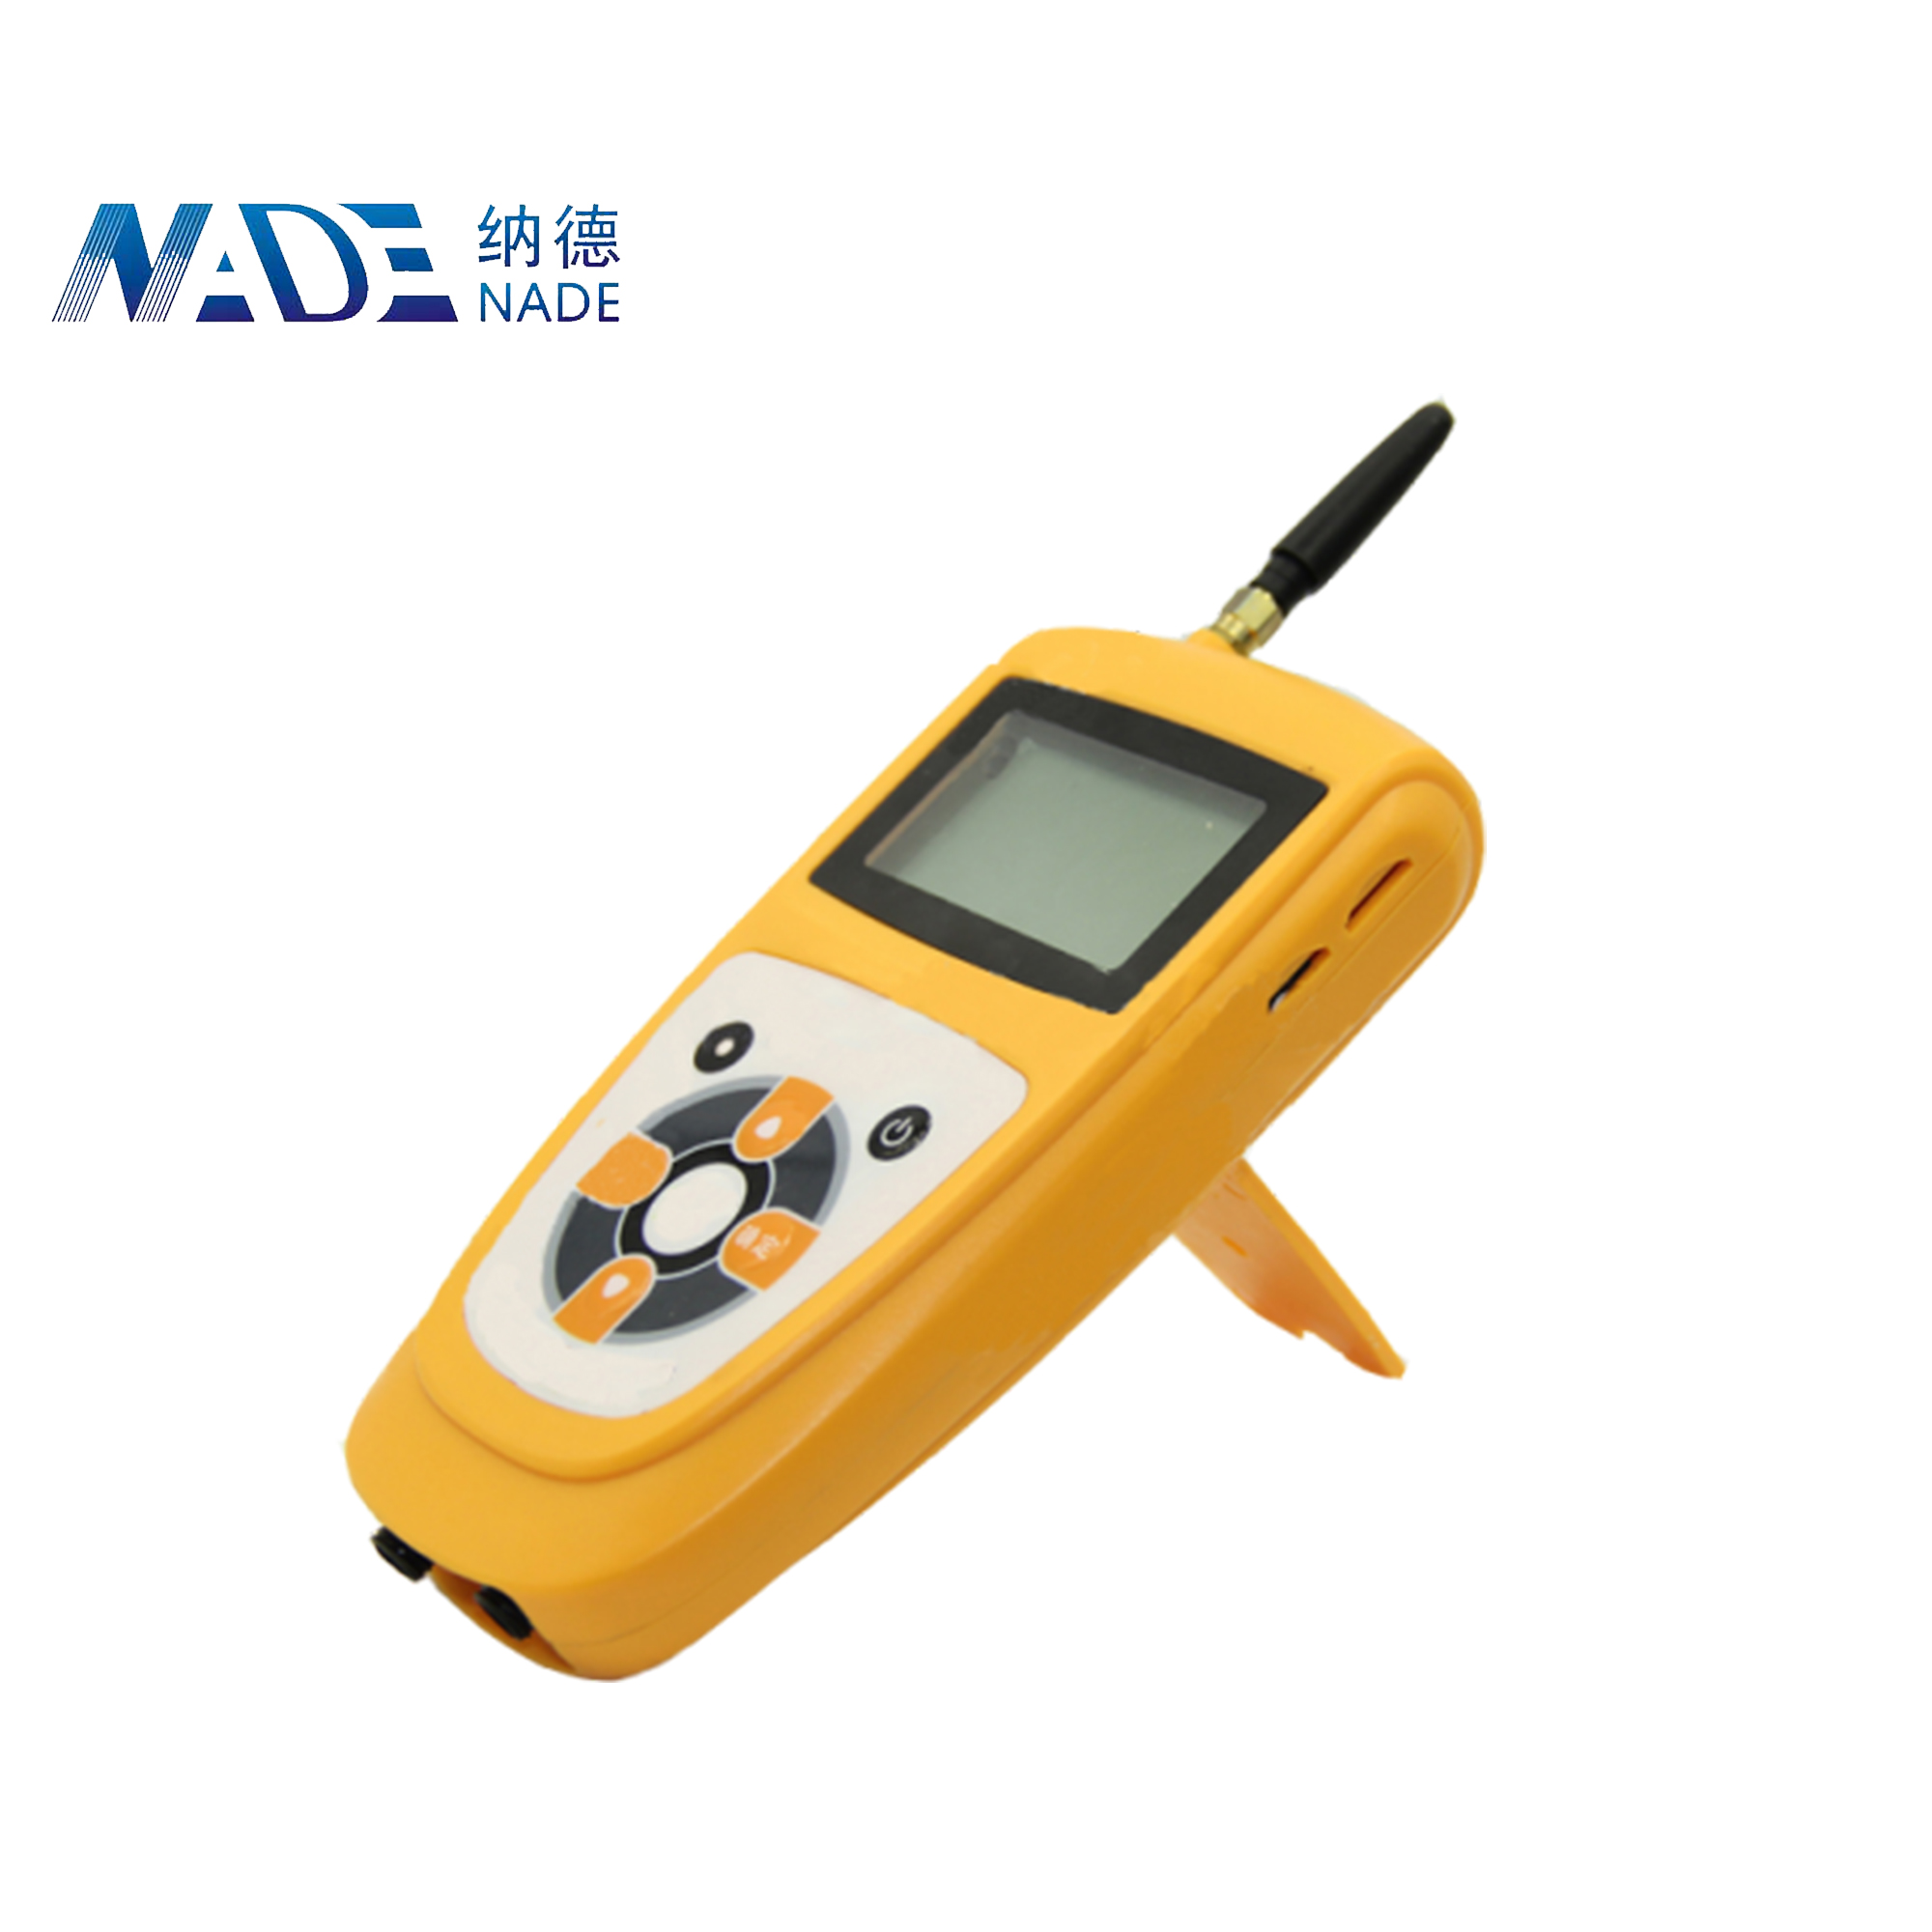 NADE TPJ series Handheld agricultural environment sensor/portable Multifunction Weather Monitor